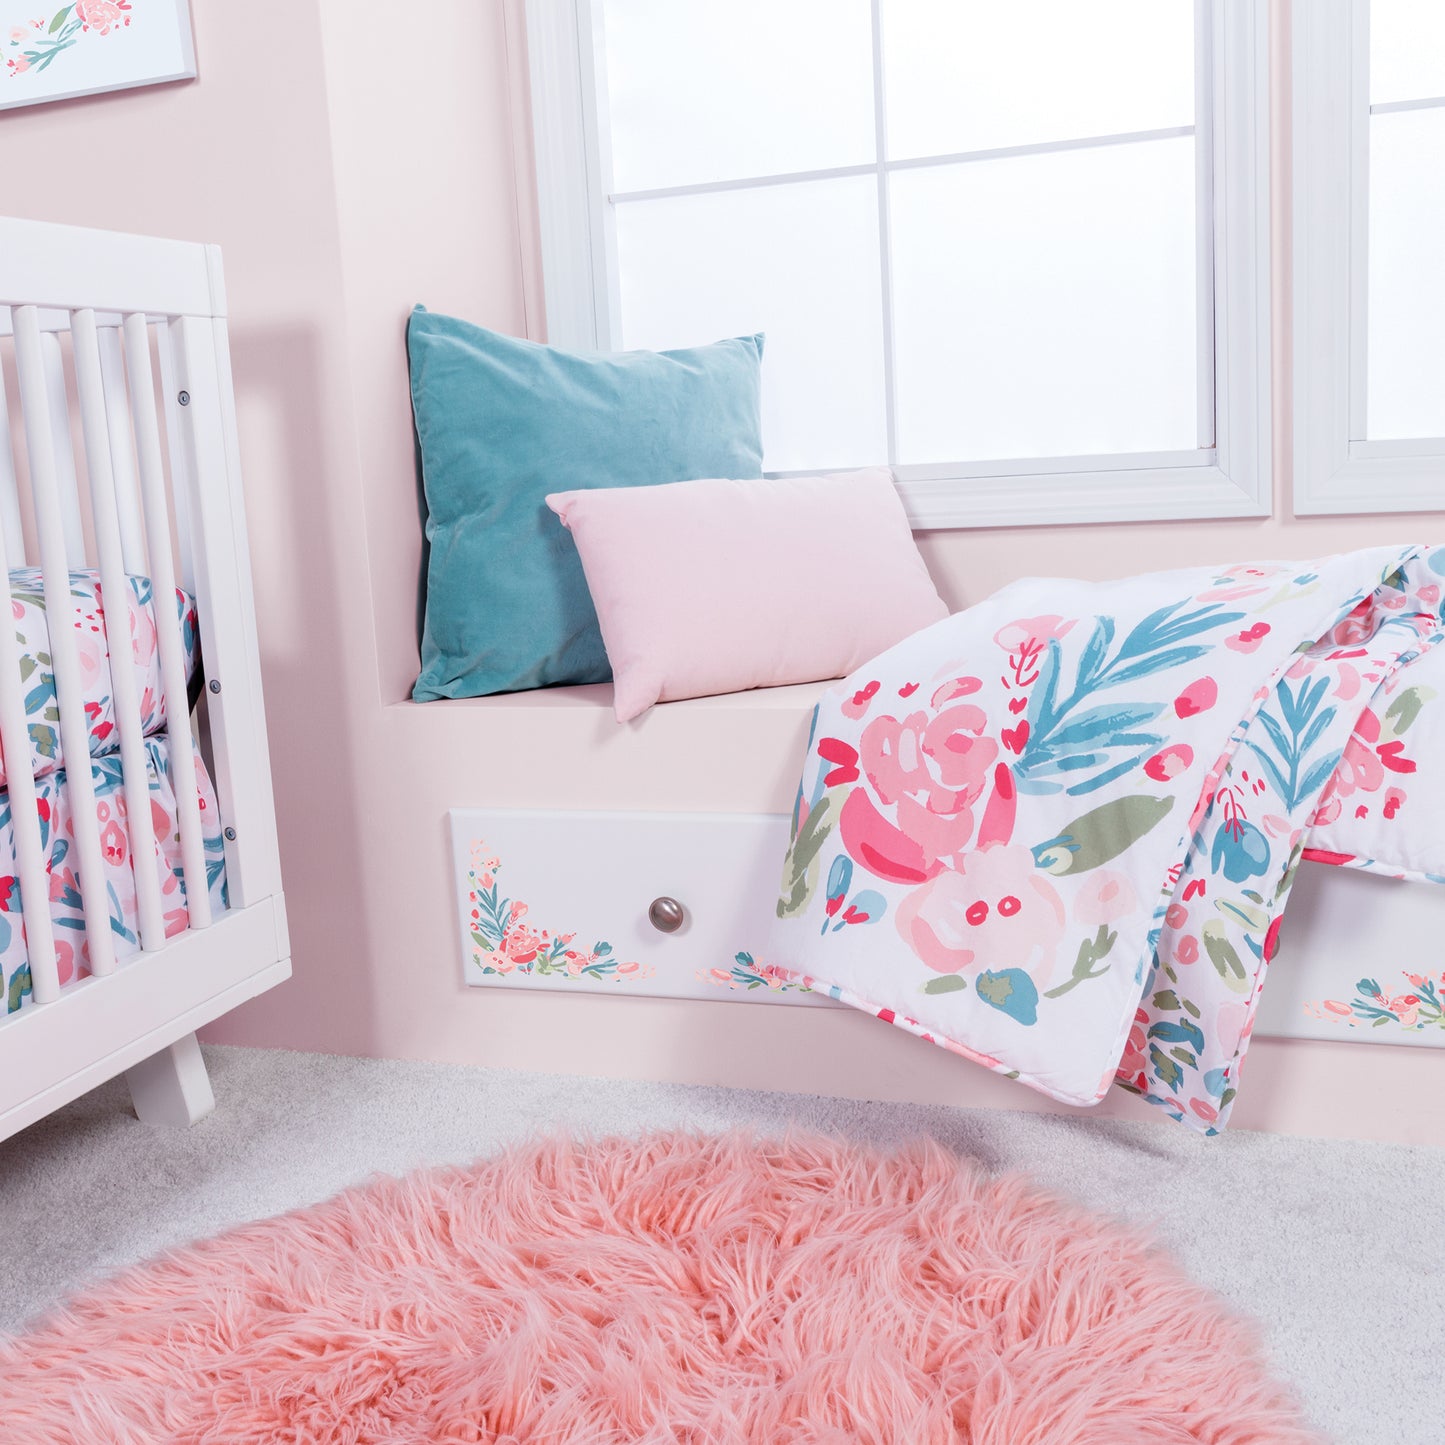 Painterly Floral 3 Piece Crib Bedding Set